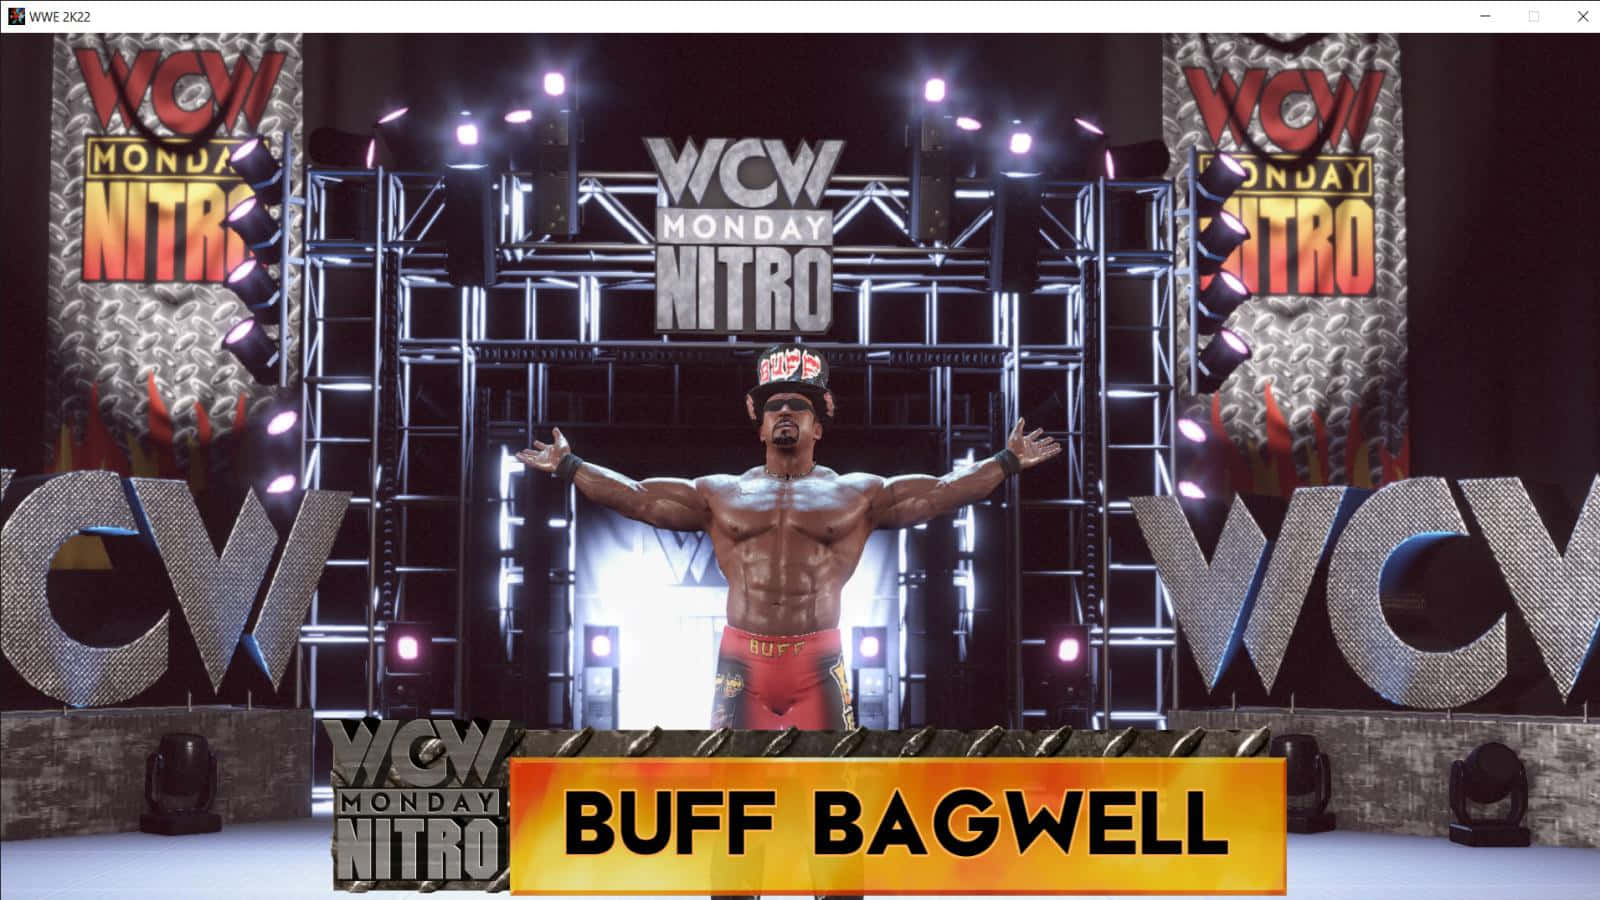 Buff Bagwell Wcw Monday Nitro Wrestler Photography Wallpaper